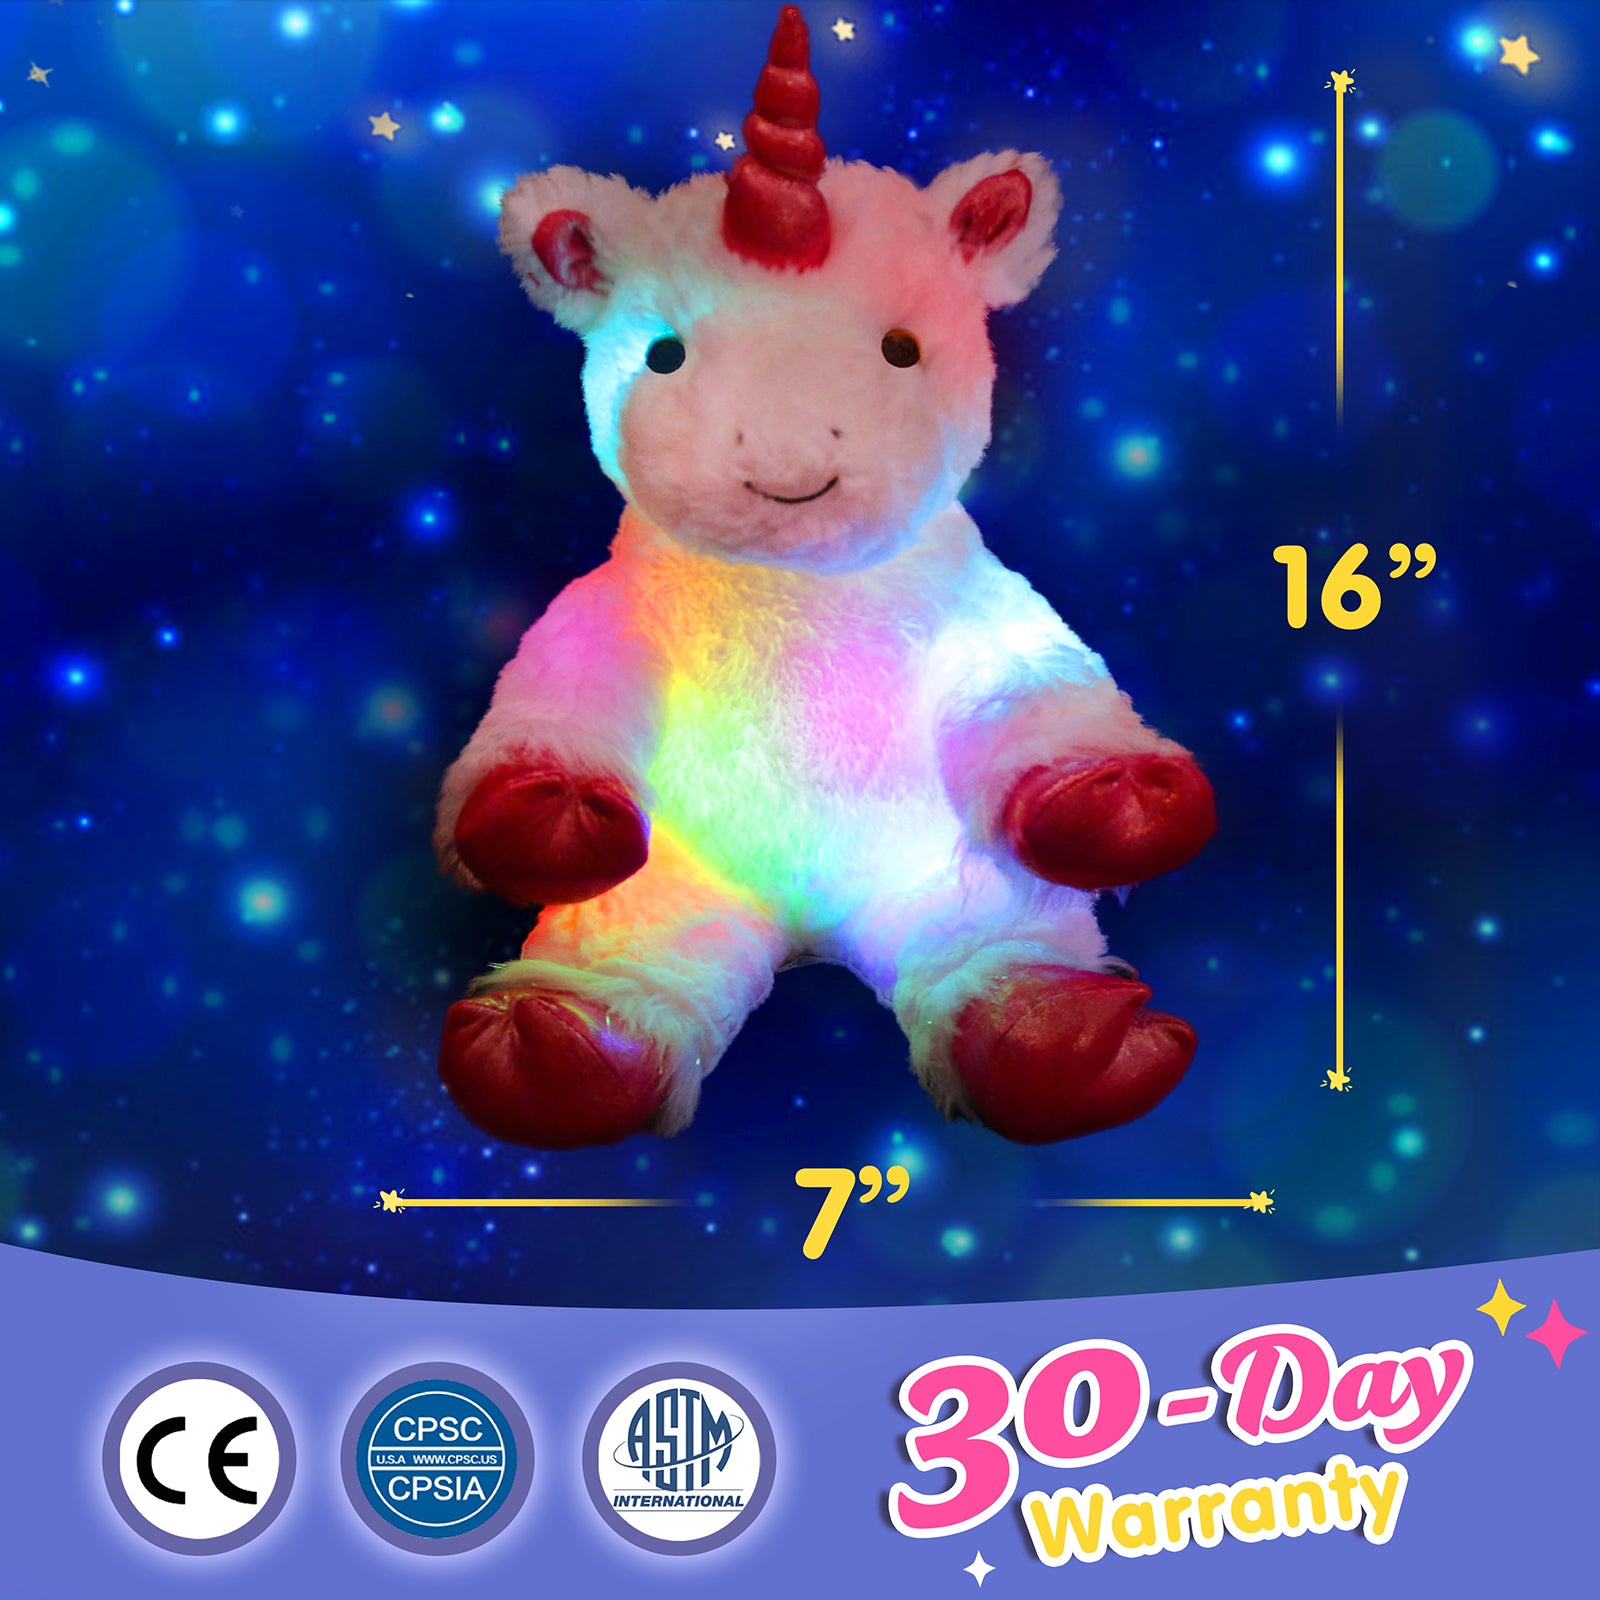 Wewill Light up Unicorn LED Stuffed Animal Soft White Plush Glow Toy - Glow Guards